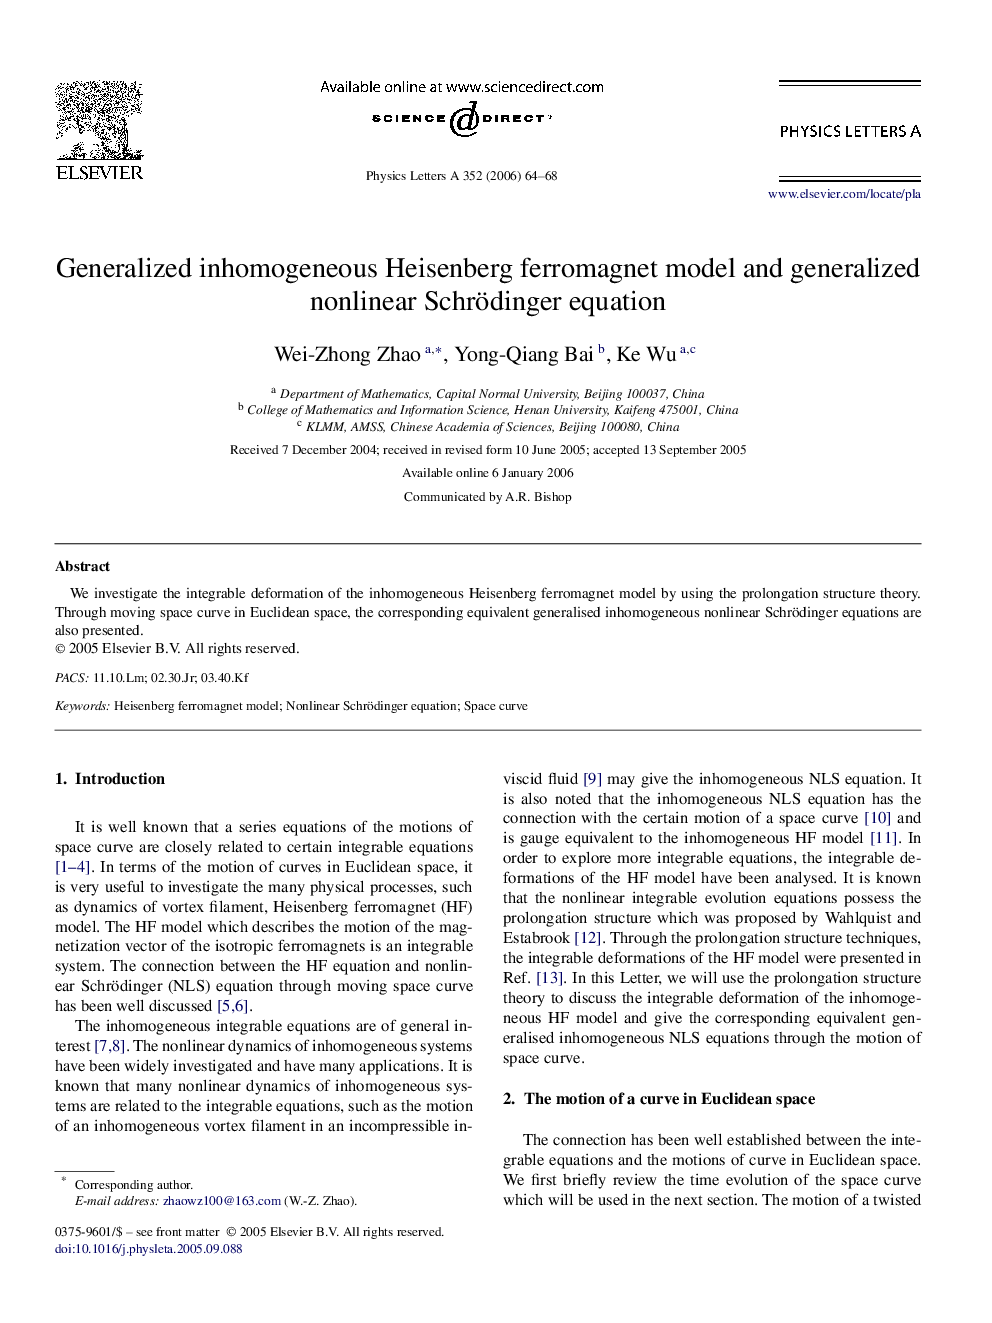 Generalized inhomogeneous Heisenberg ferromagnet model and generalized nonlinear Schrödinger equation